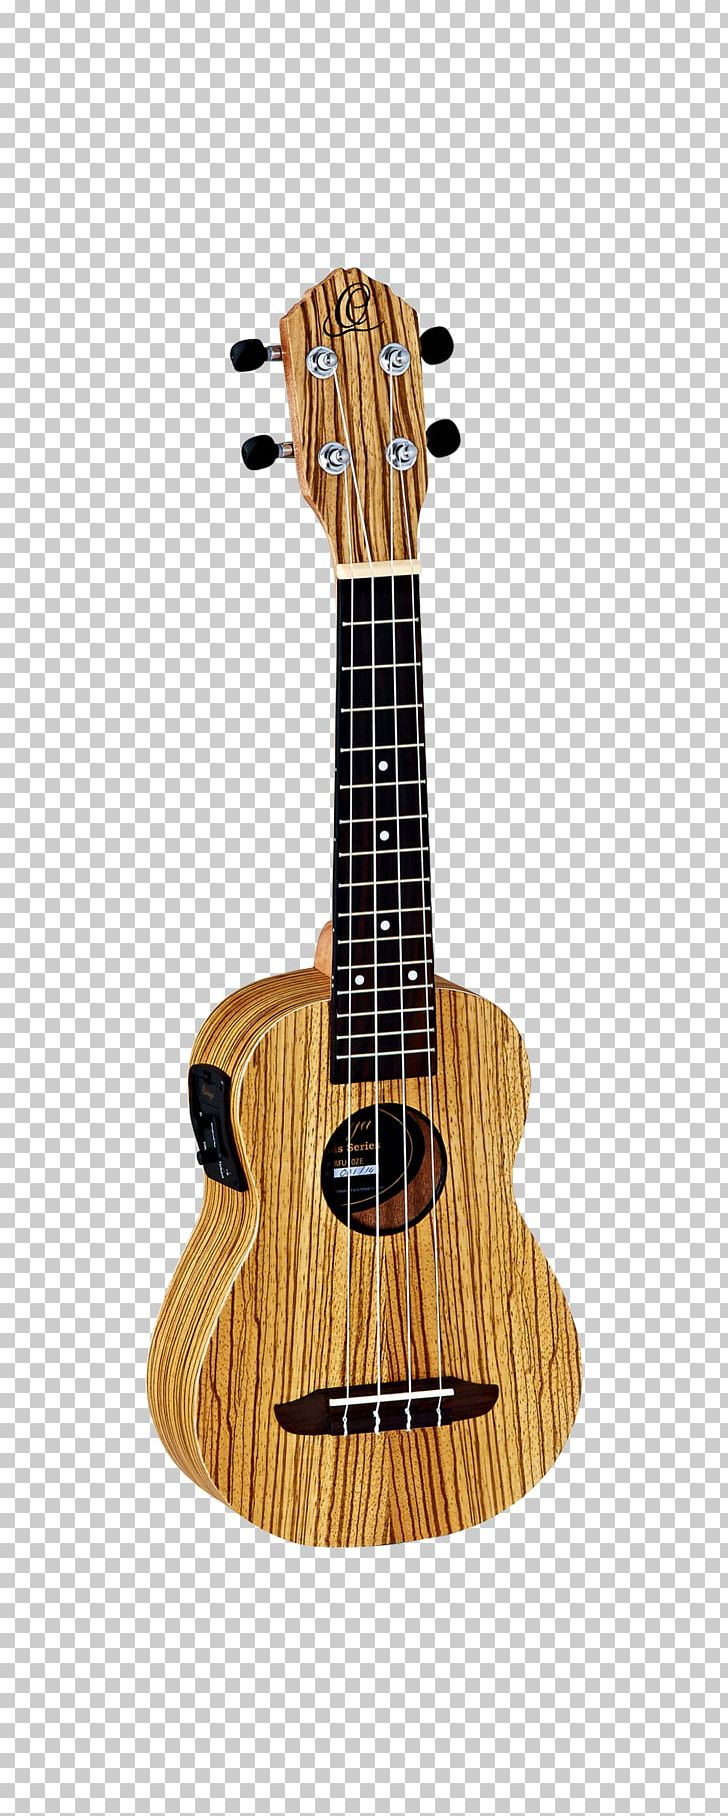 Ukulele Acoustic Guitar Musical Instruments Acoustic-electric Guitar PNG, Clipart, Acoustic Electric Guitar, Amancio Ortega, Concert, Cuatro, Cutaway Free PNG Download